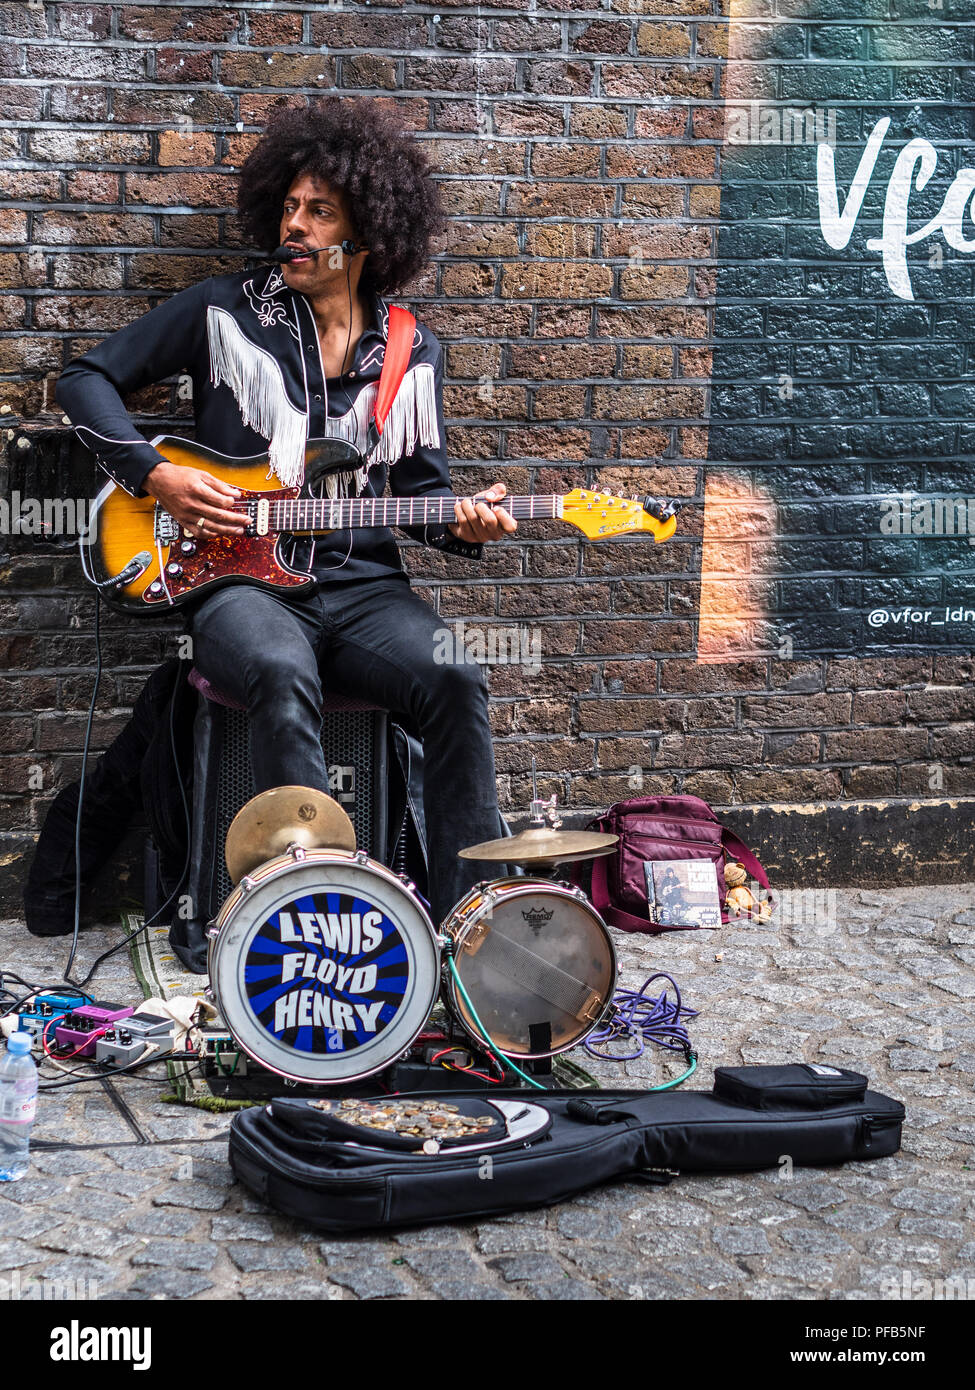 London Busker - Brick Lane Busker - London Street musicista e One Man Band Hendrix Tribute Lewis Floyd Henry Foto Stock